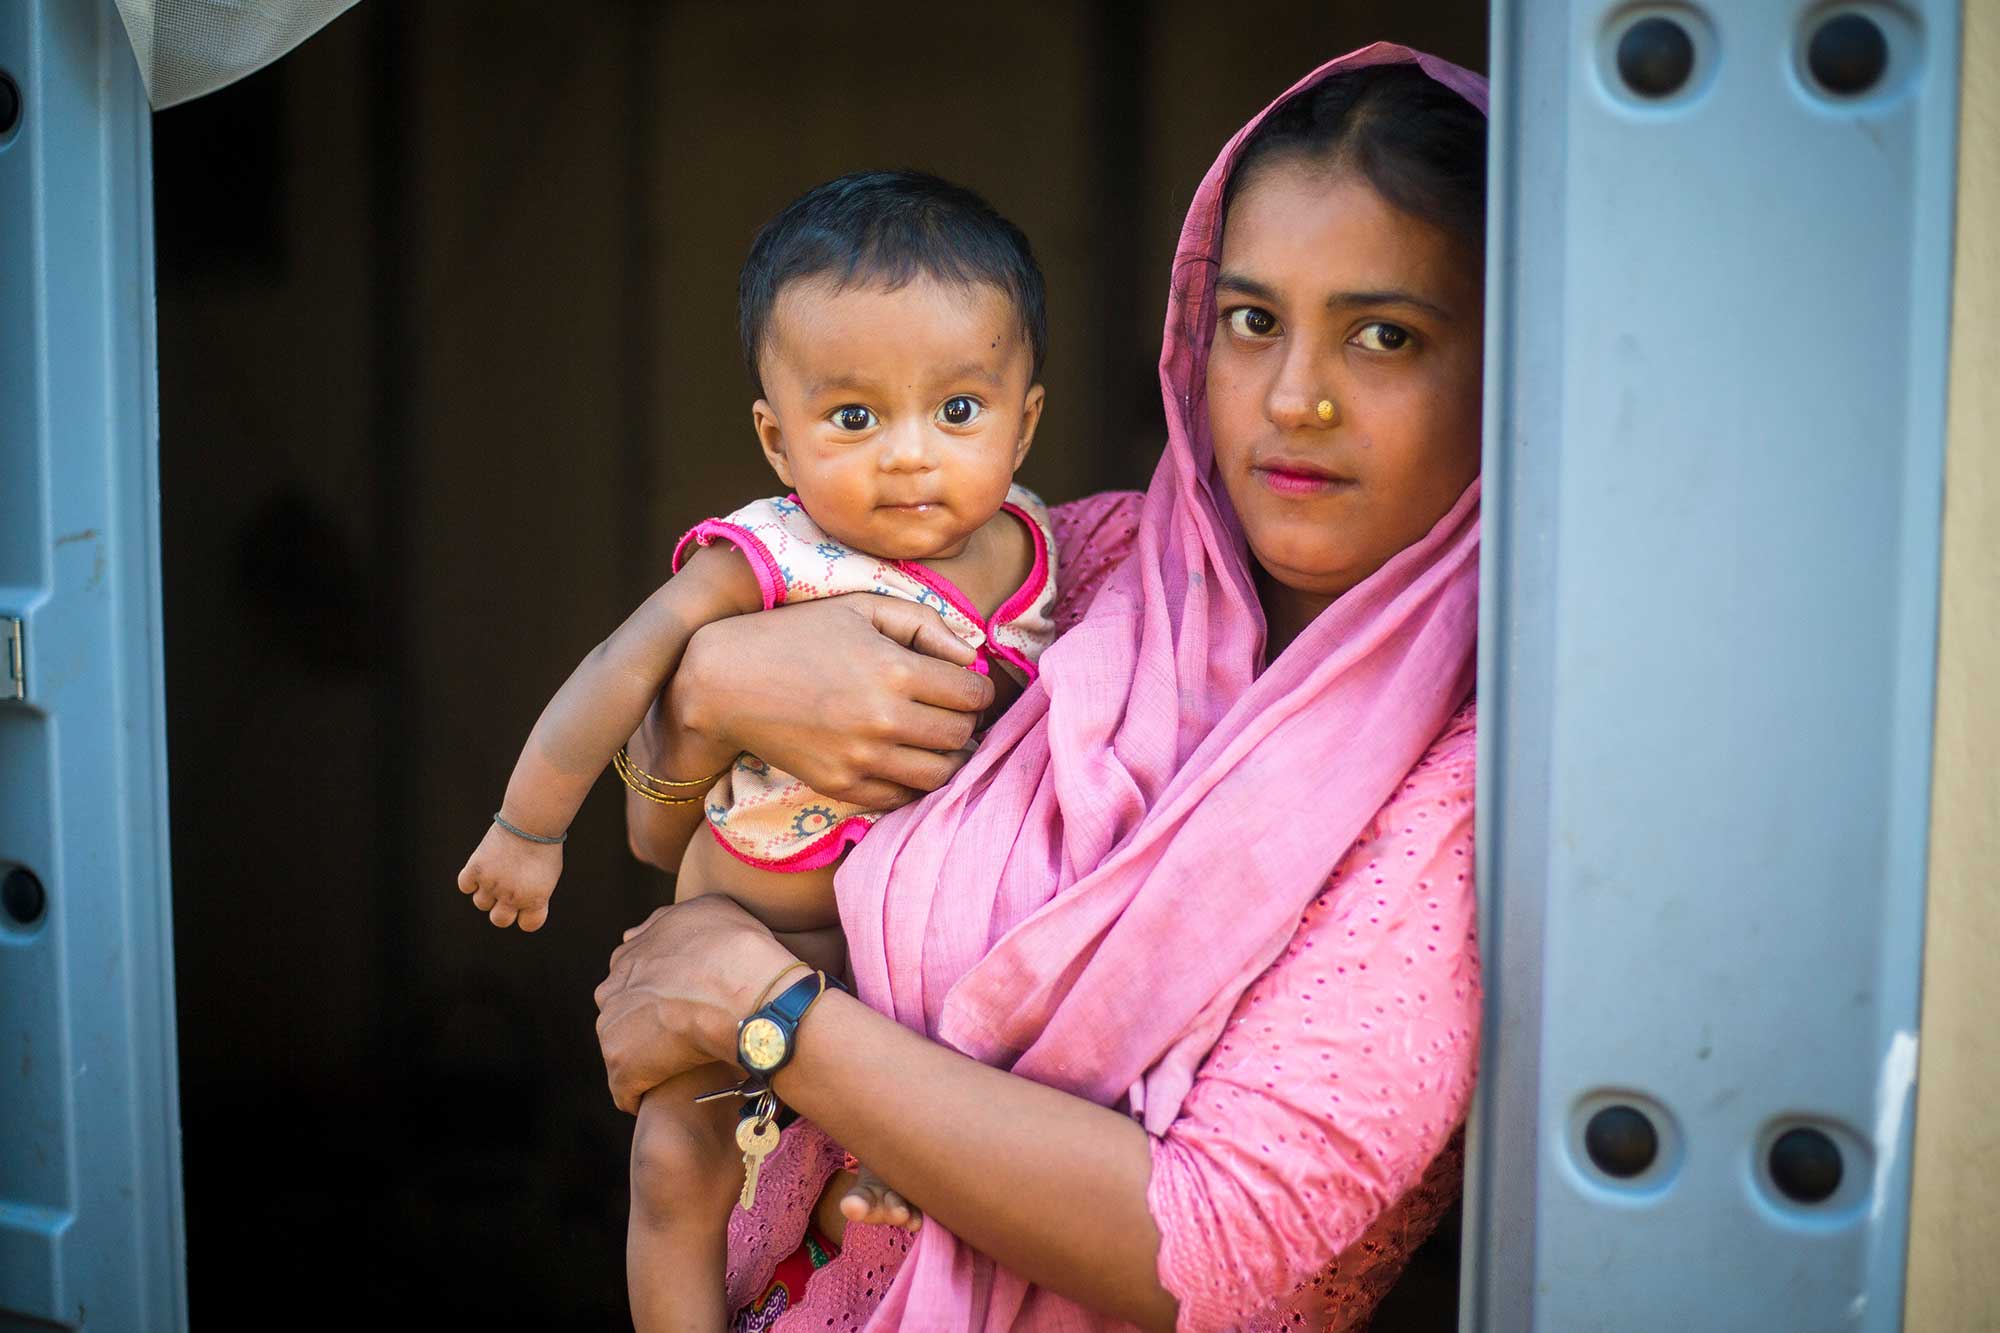 A newly arrived Rohingya family from Myanmar, including Hajira Khatun, 22, and Sadeka, 3 months